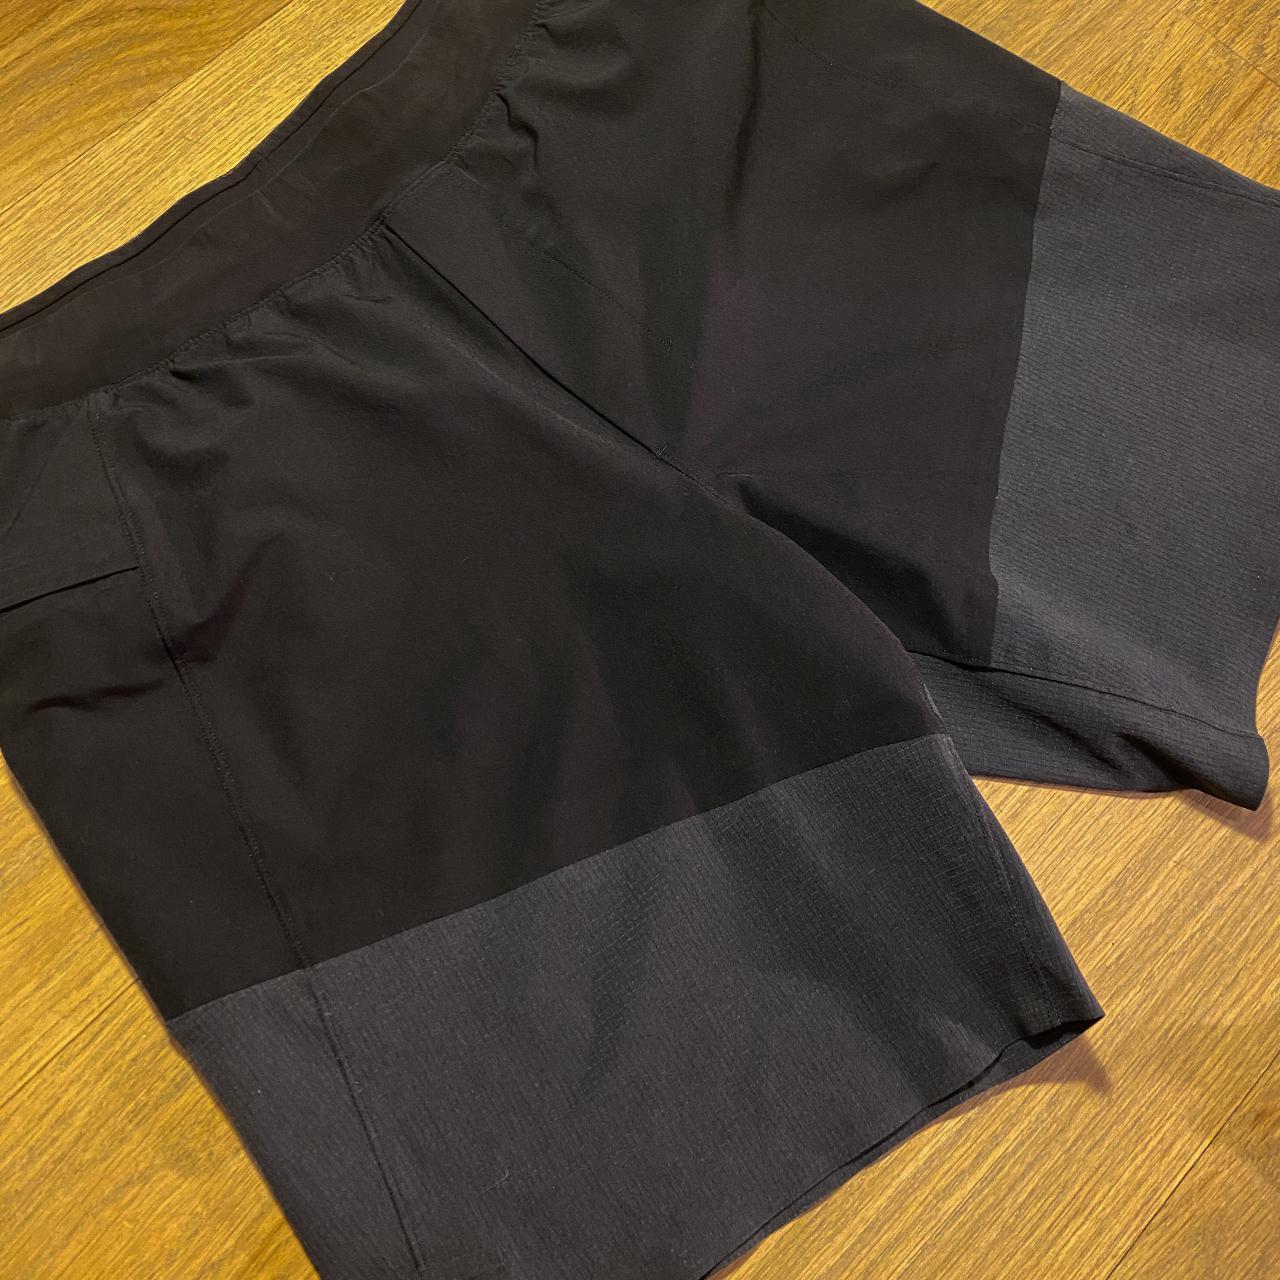 Men’s Medium Lululemon Shorts. Black and Gray with... - Depop